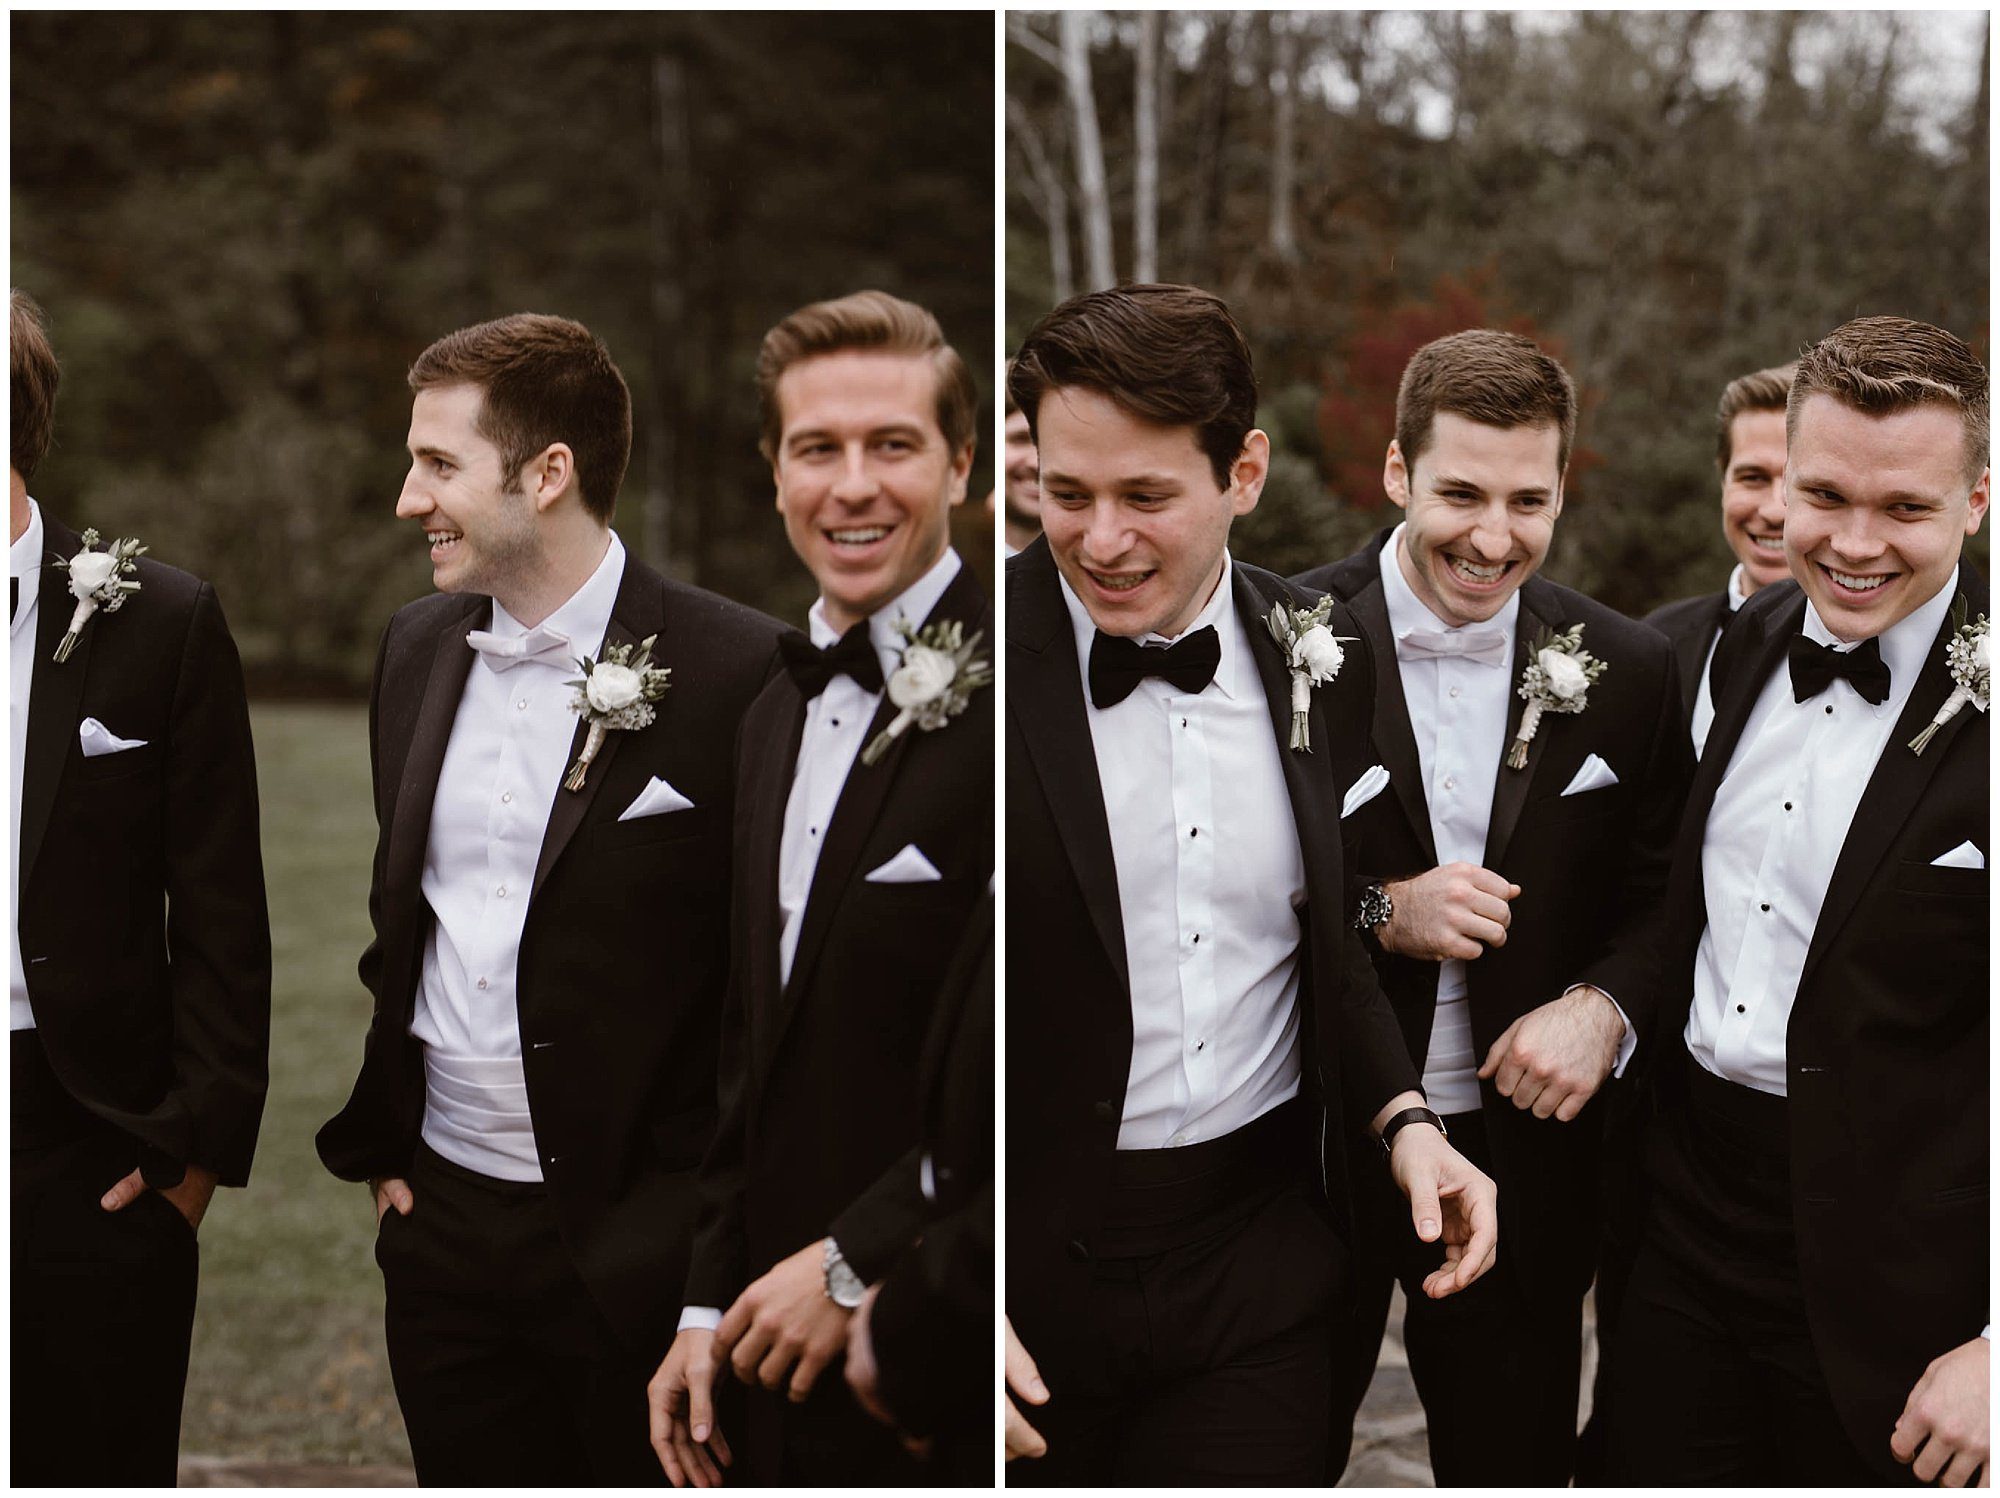 Candid groom and groomsmen photos